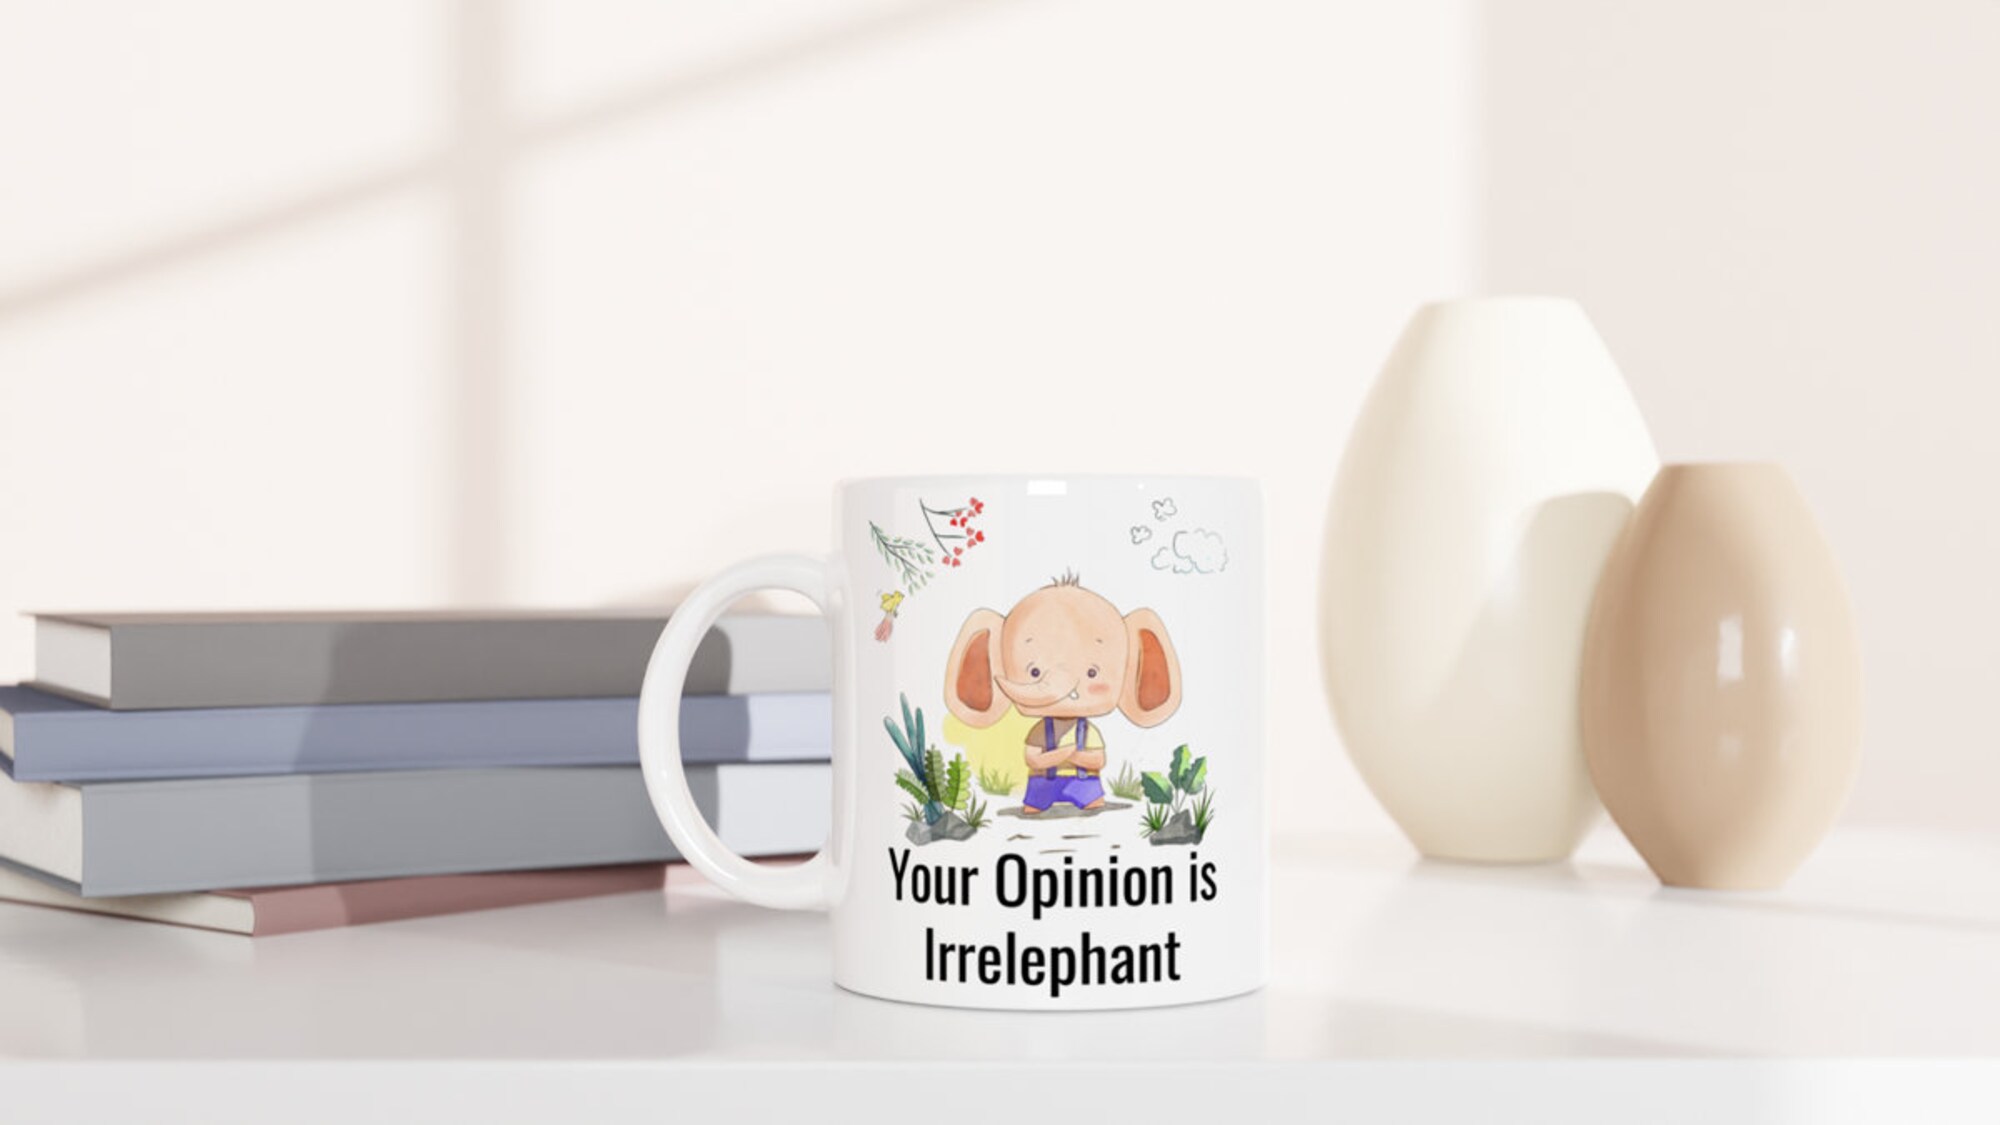 Cute Mug! Elephant Gifts! Your Opinion is Irrelephant Mug!